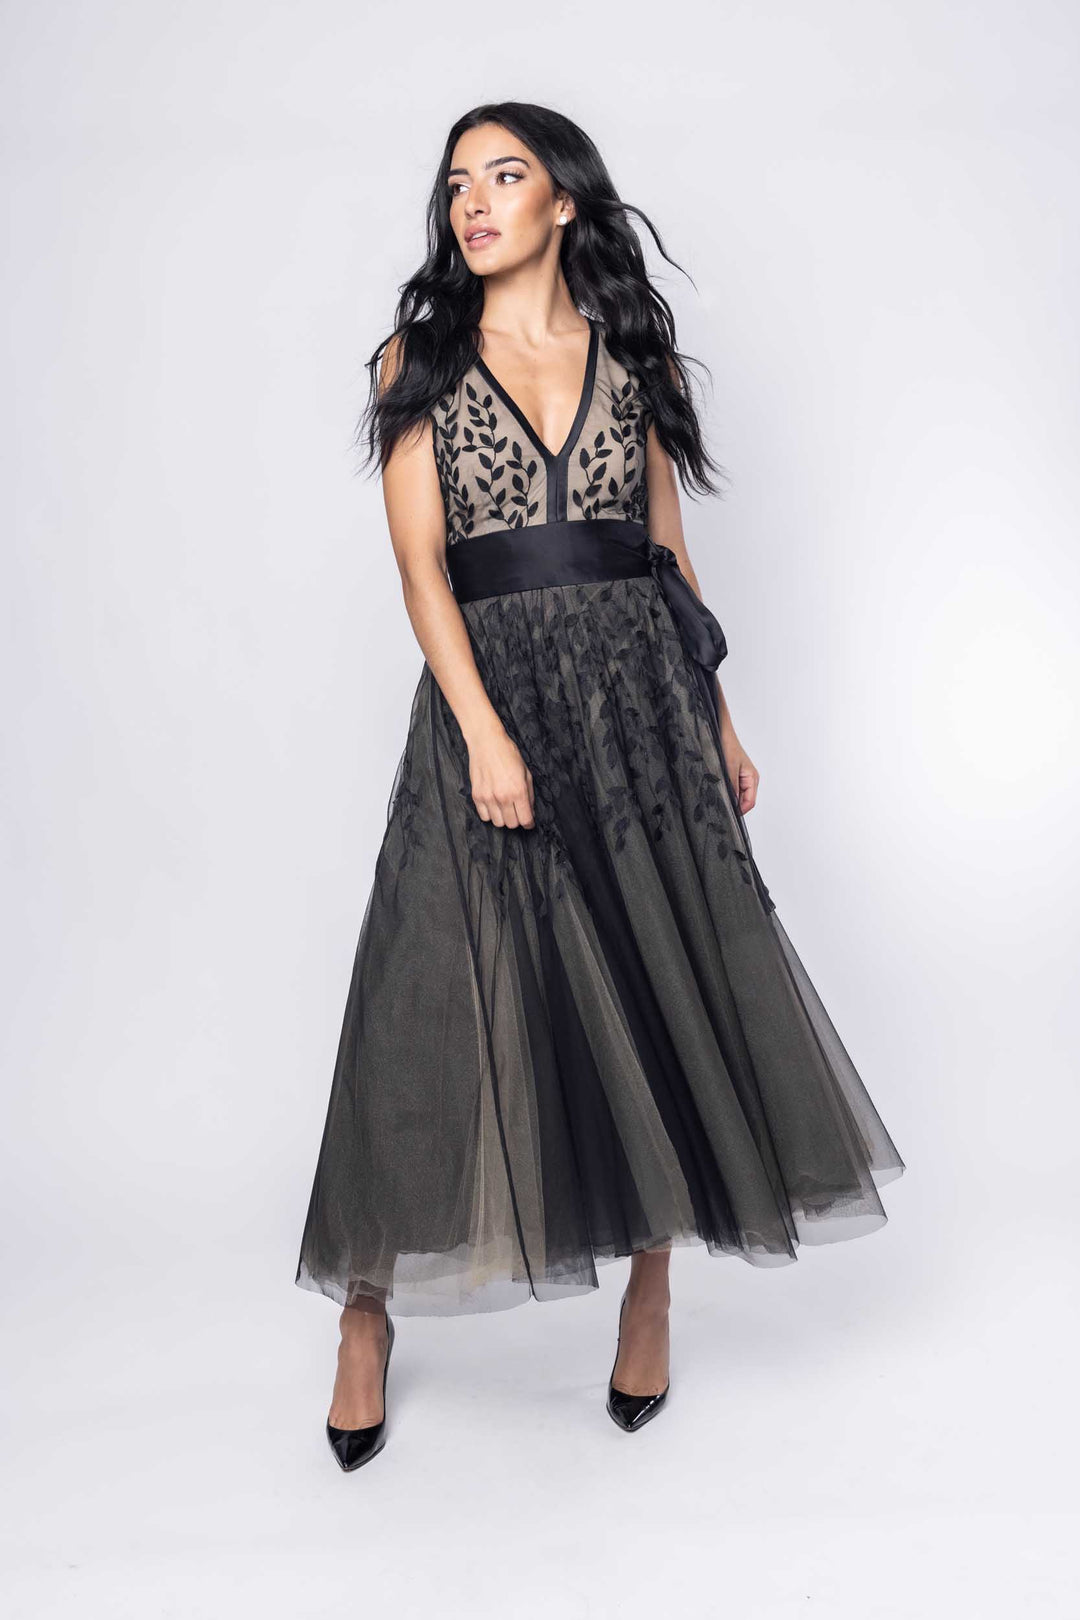 Beautiful model in an ornate black tea-length Sujata Gazder dress - front view movement